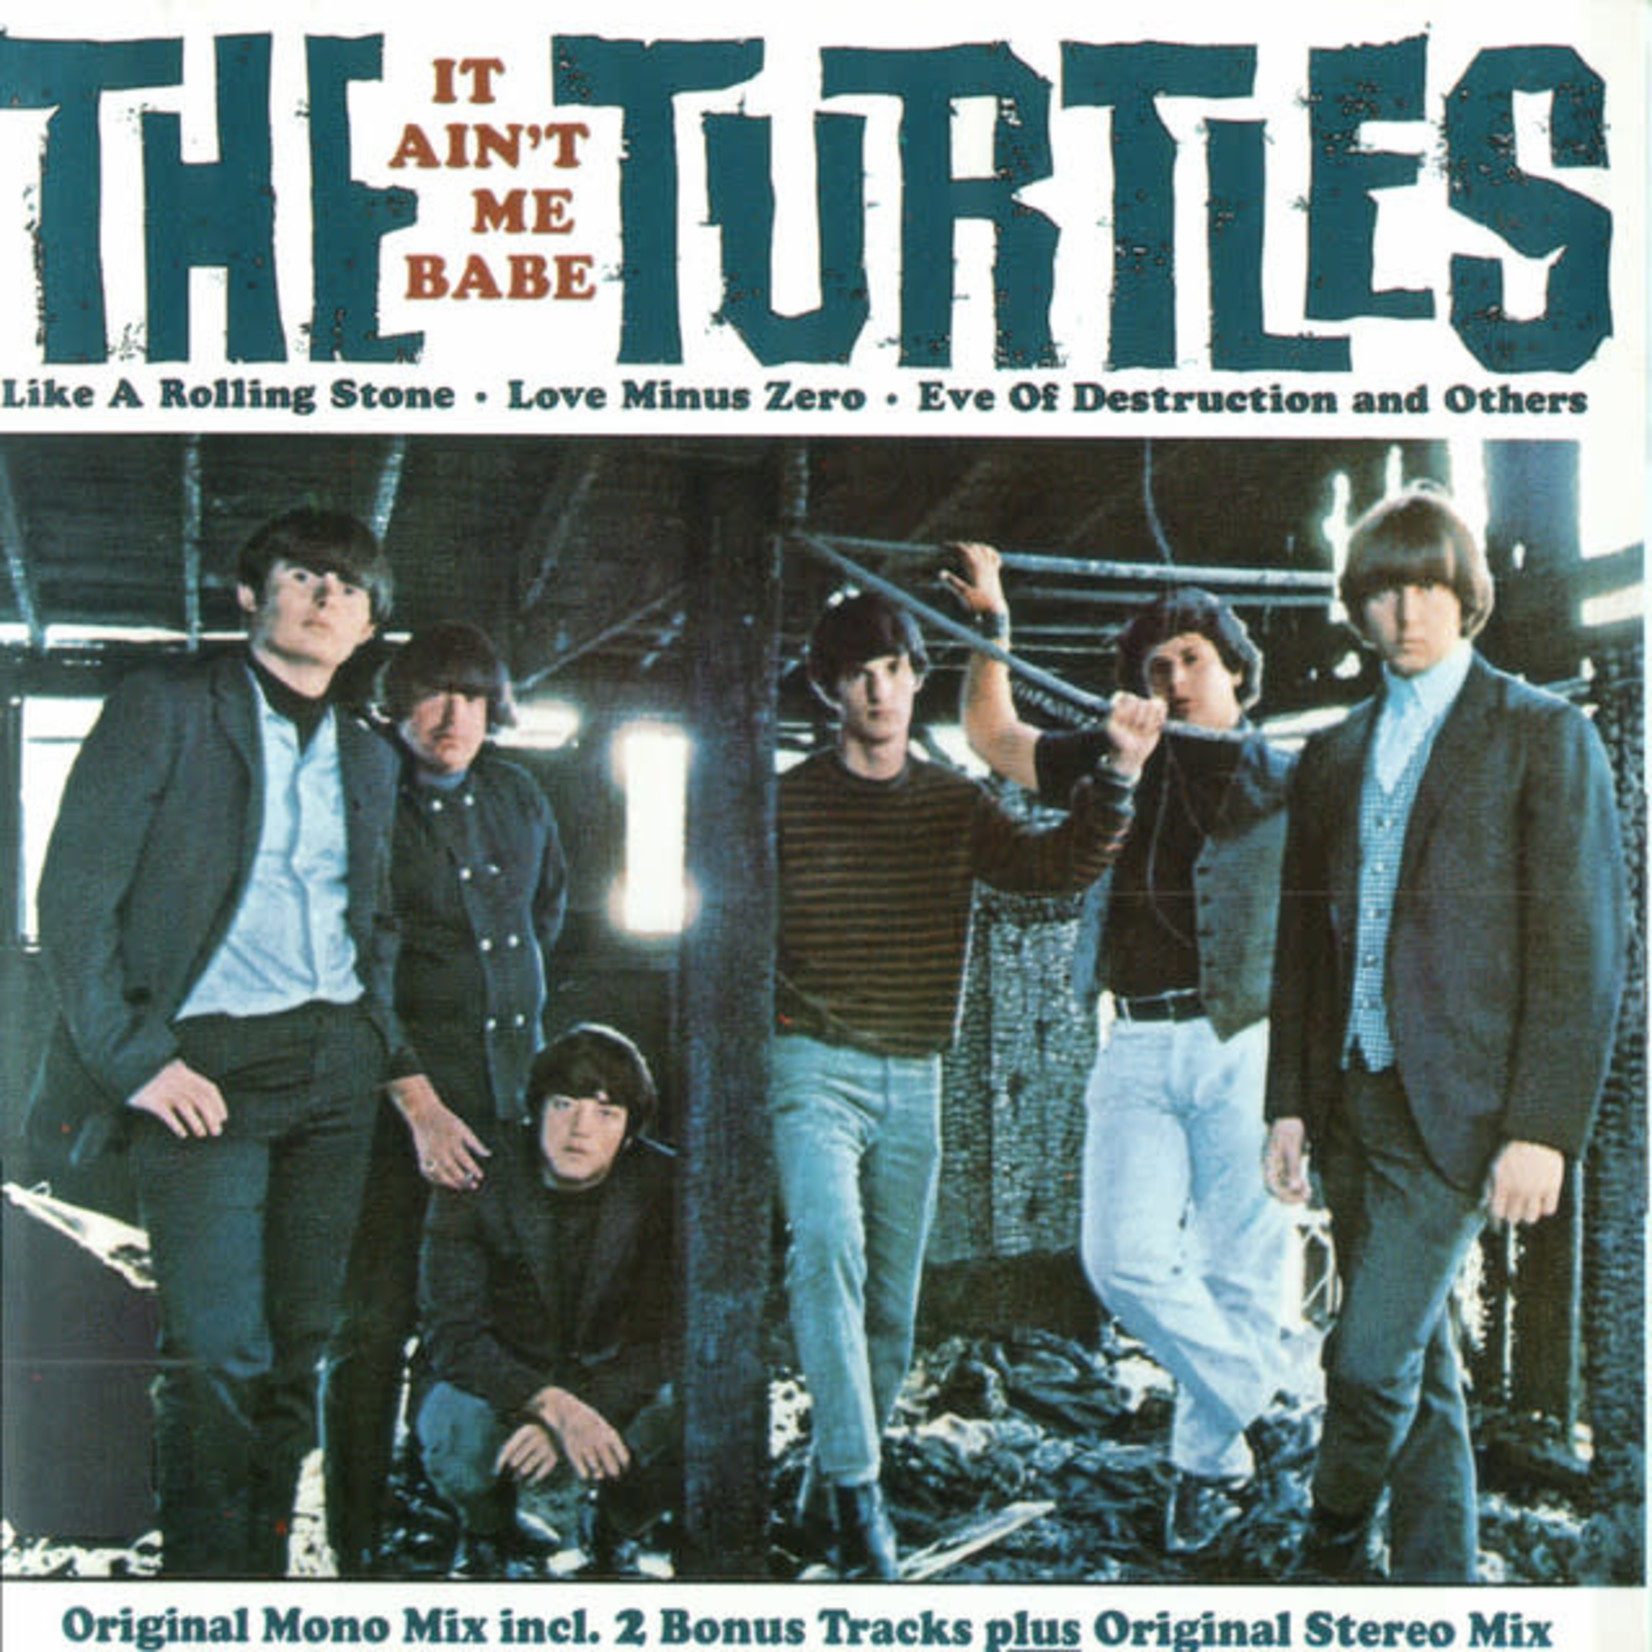 Vinyl The Turtles - It Ain't Me Babe